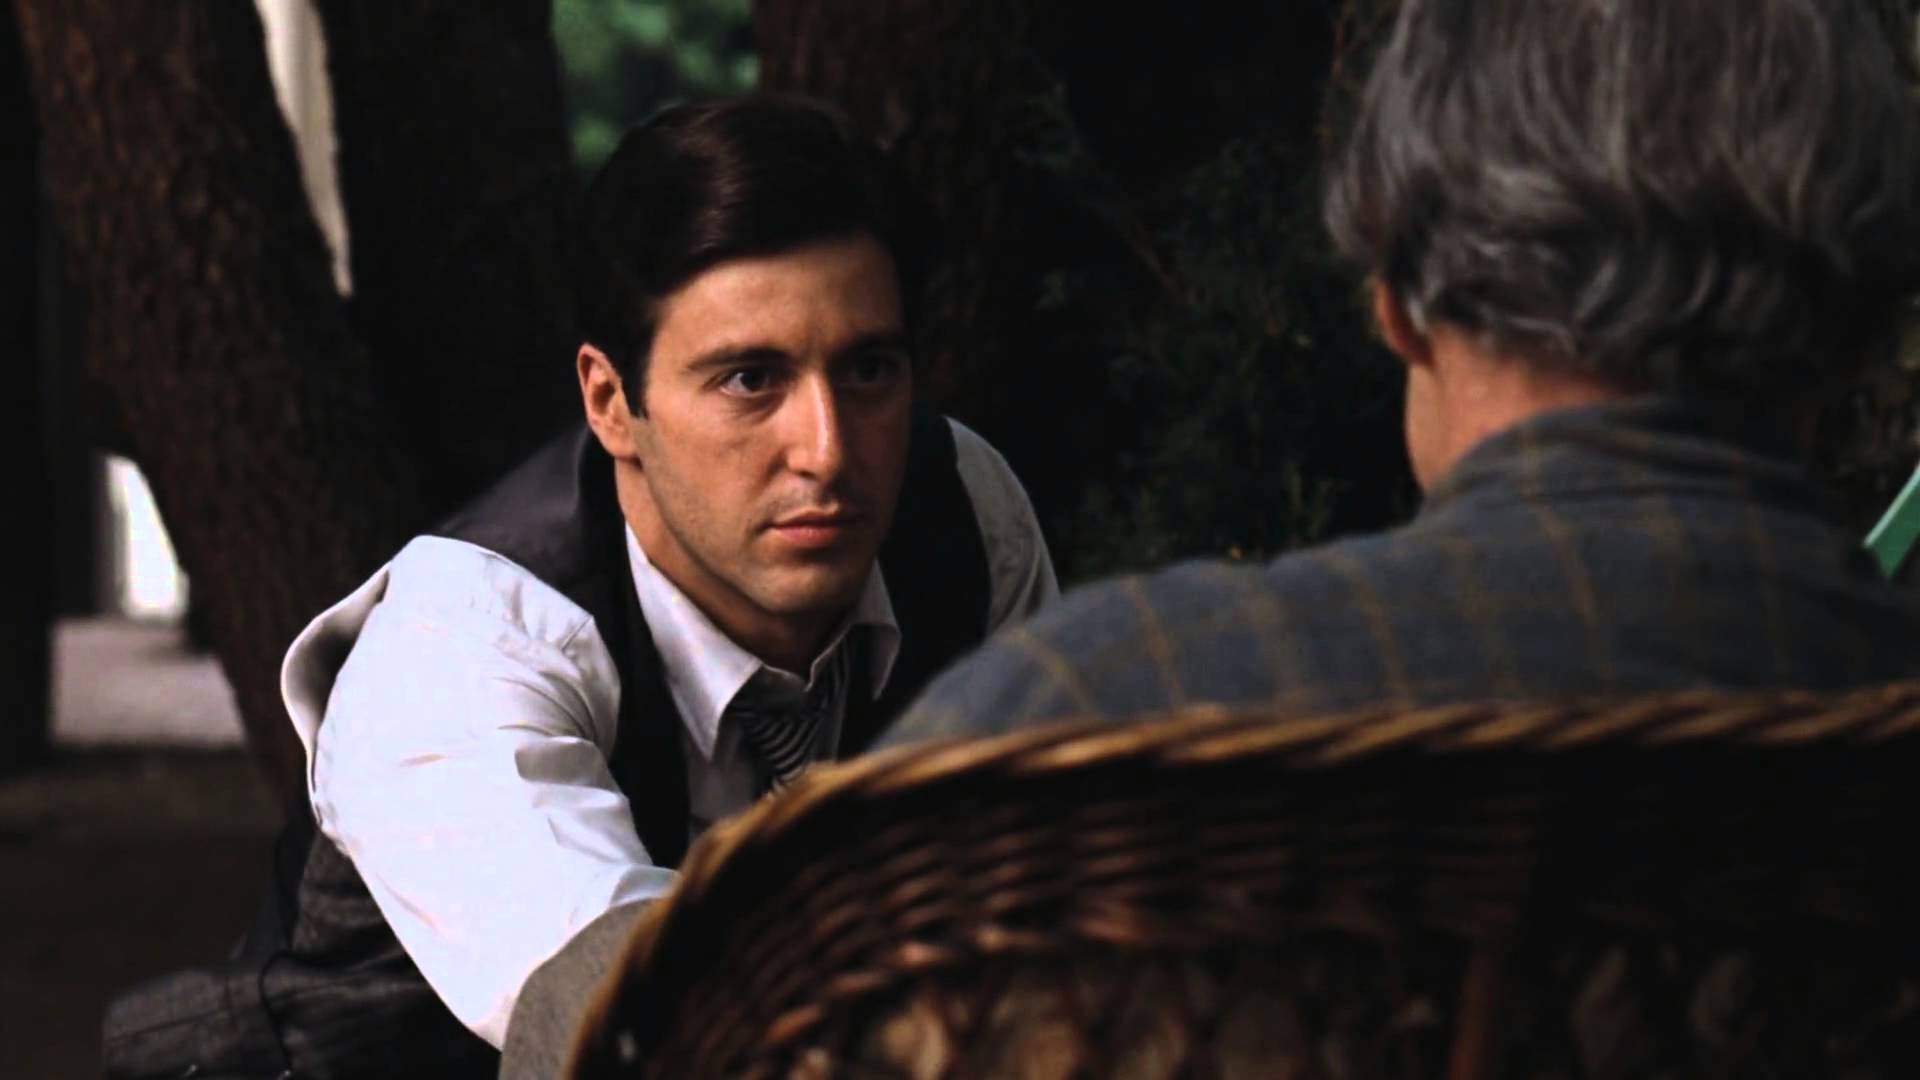 Marlon Brando & Al Pacino Best scene from Godfather 1972 1080p